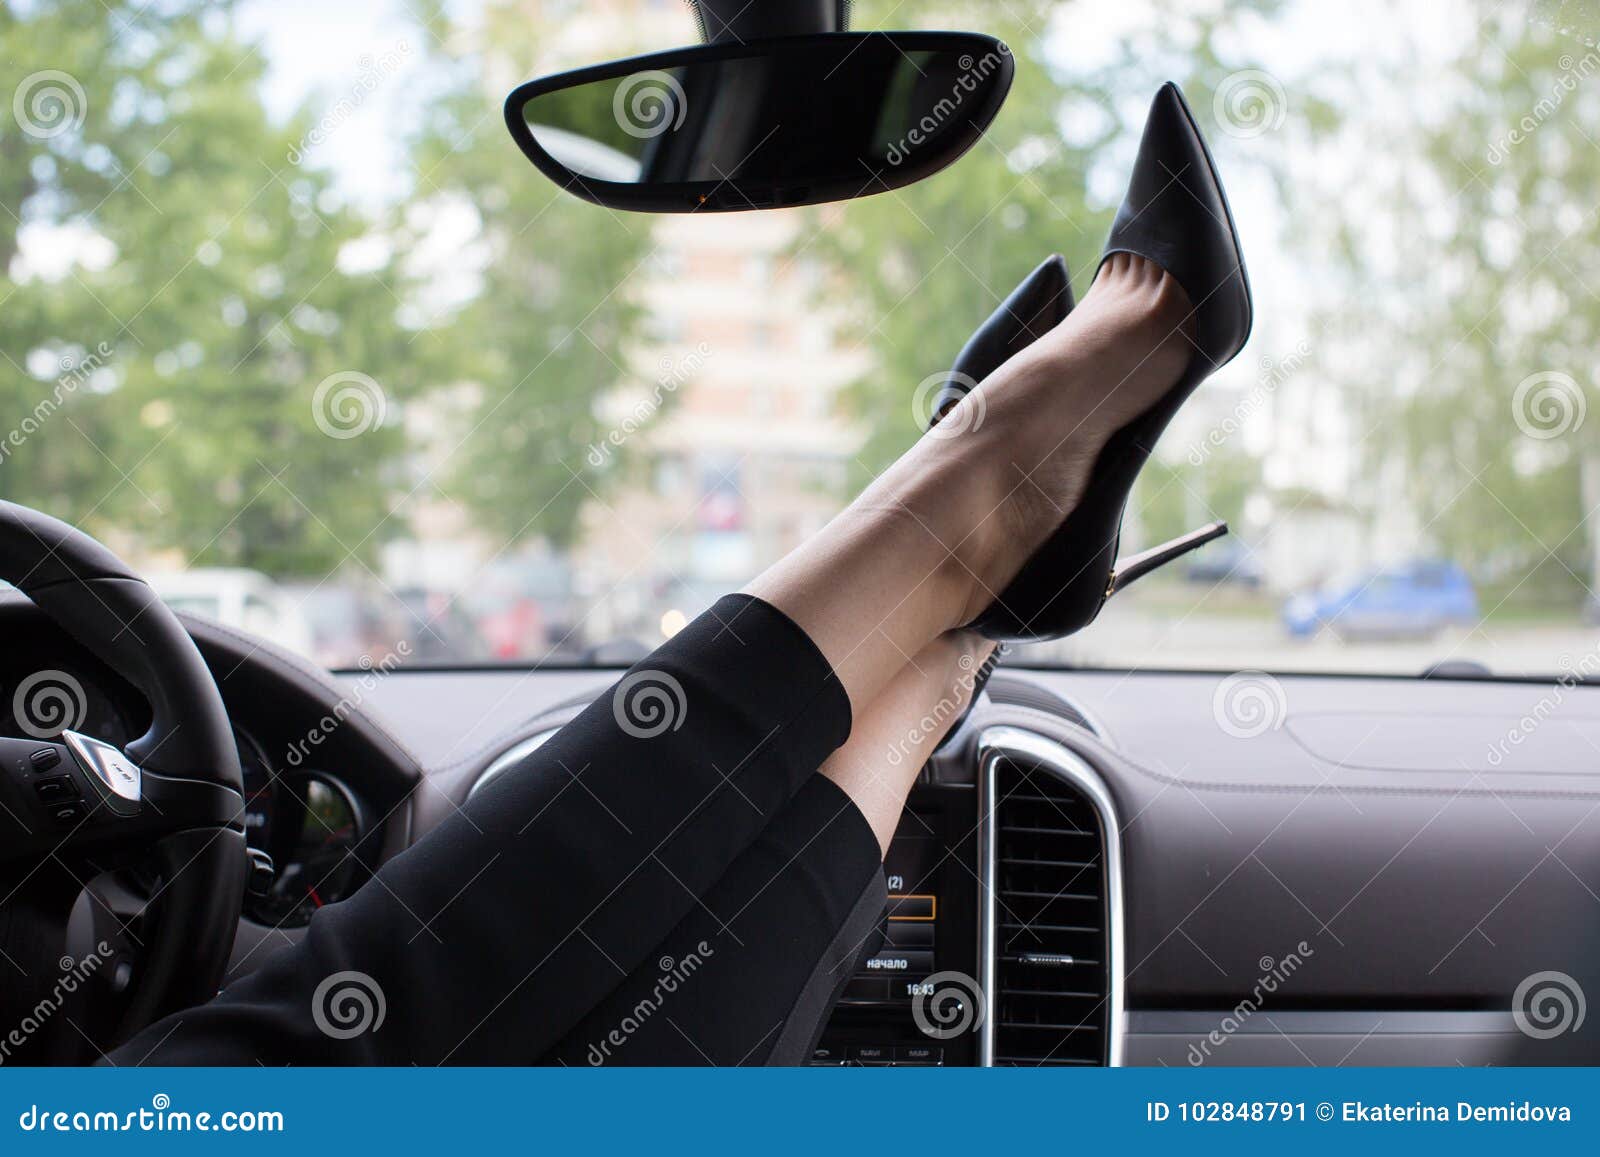 Woman Feet Heels on Car Dashboard Stock Image - Image of girl, foot ...